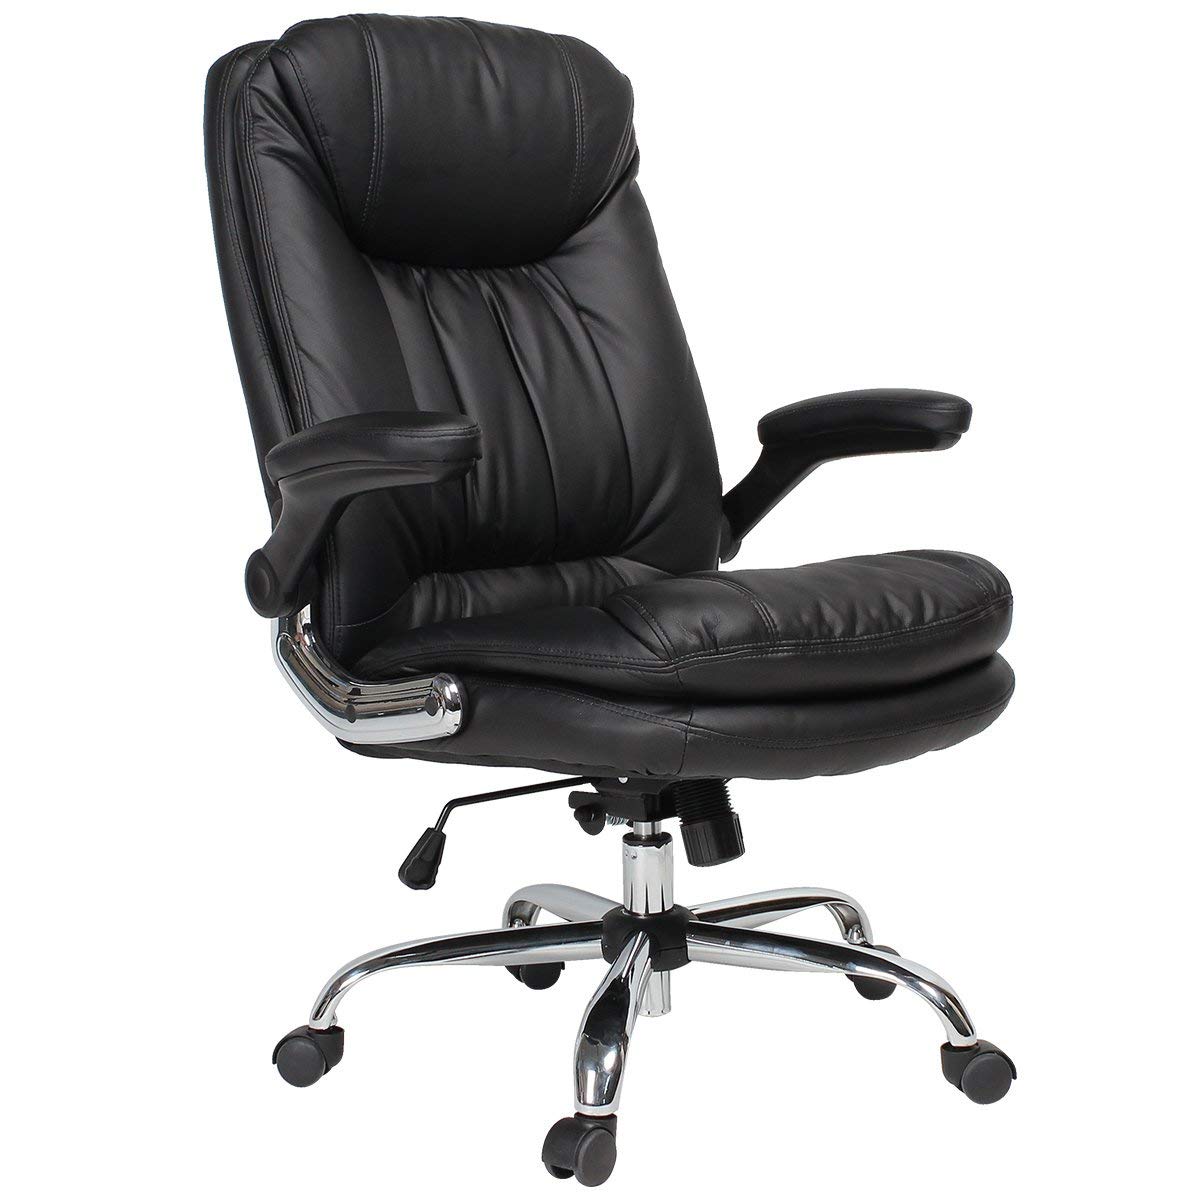 yamasoro ergonomic high back chair